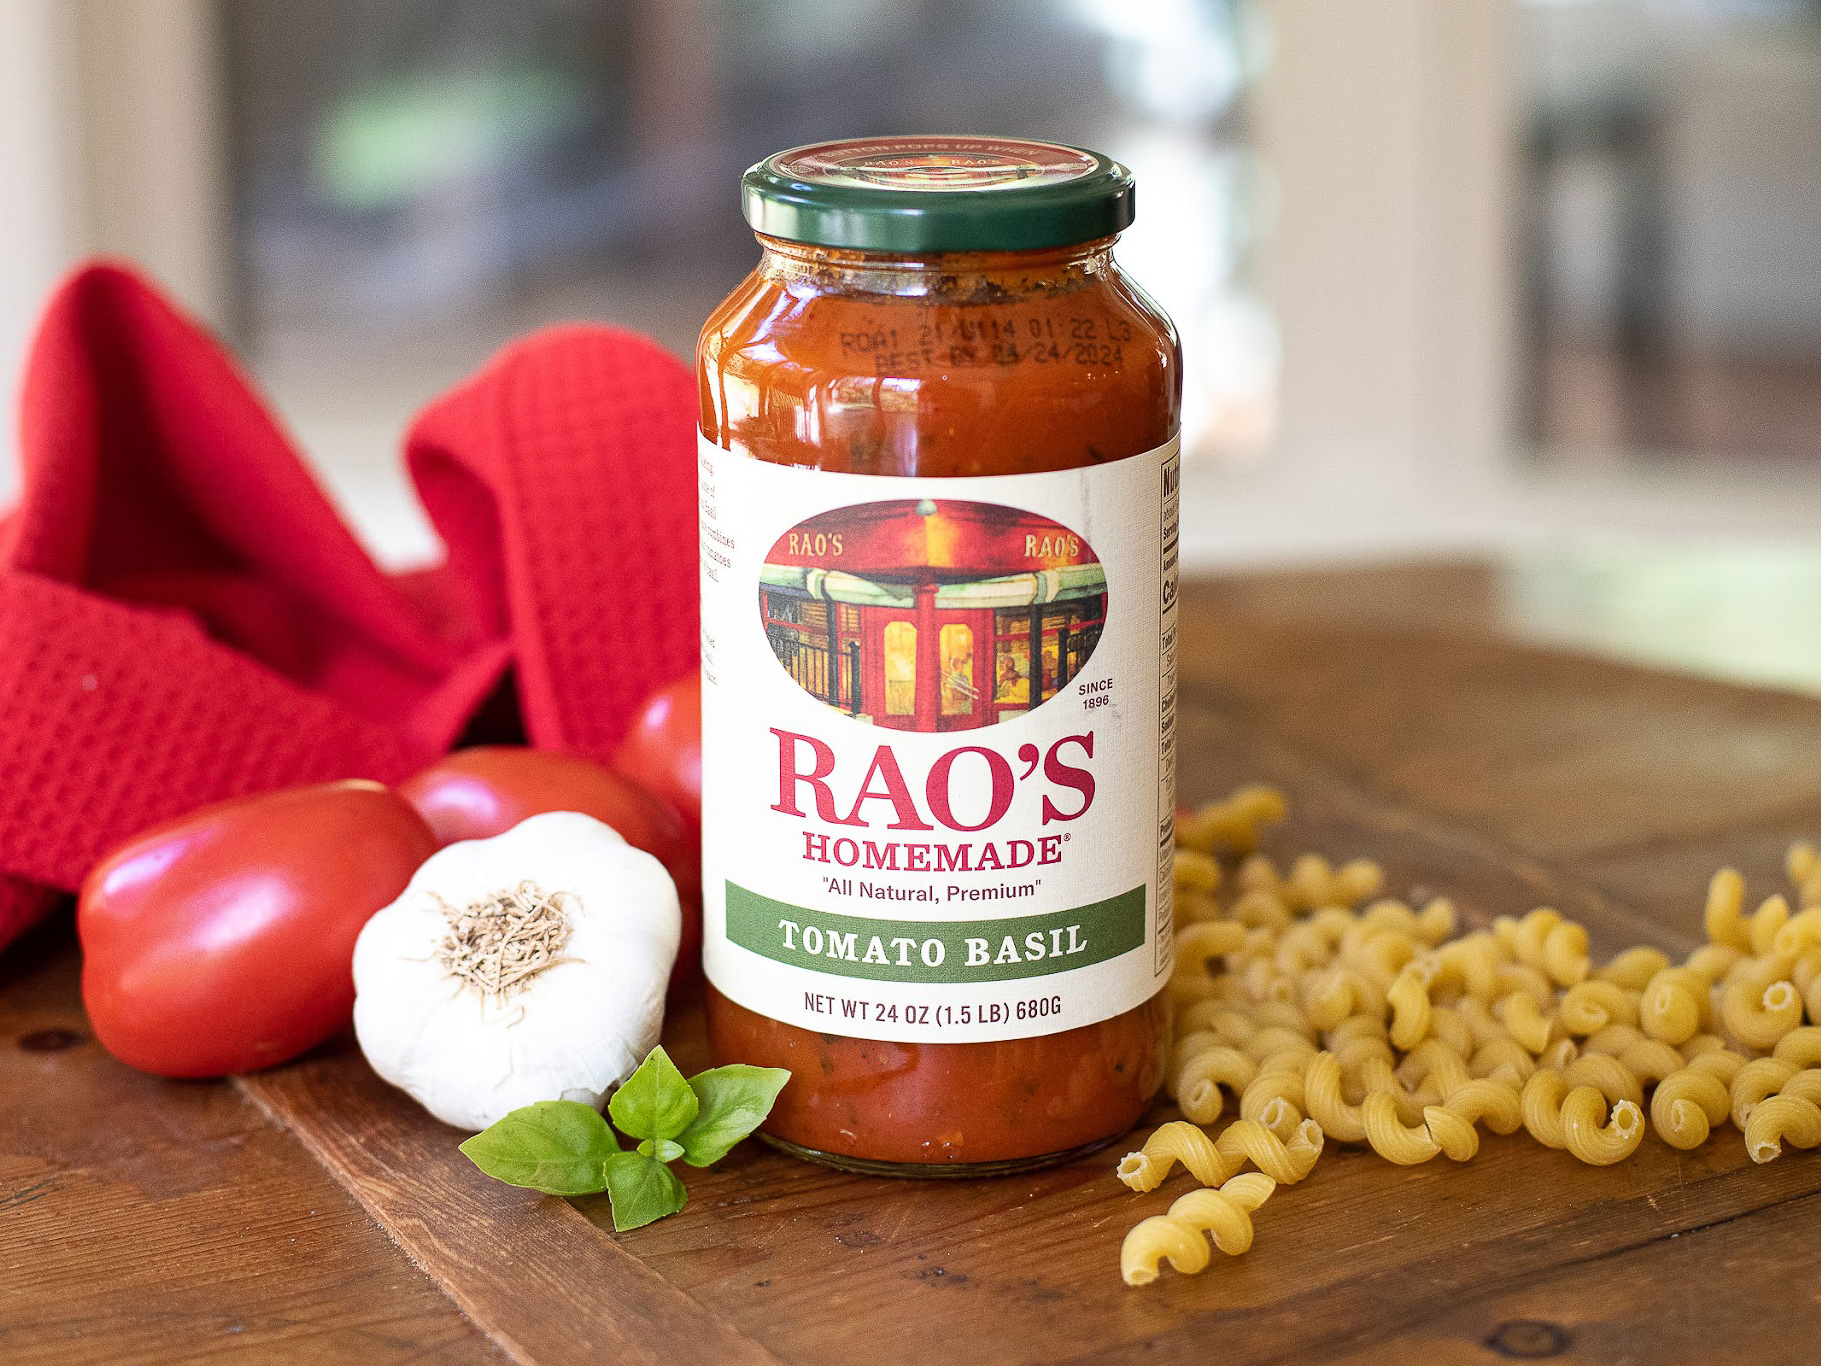 Grab The Big Jars Of Rao’s Pasta Sauce For Just $5.99 At Kroger (Regular Price $10.99)